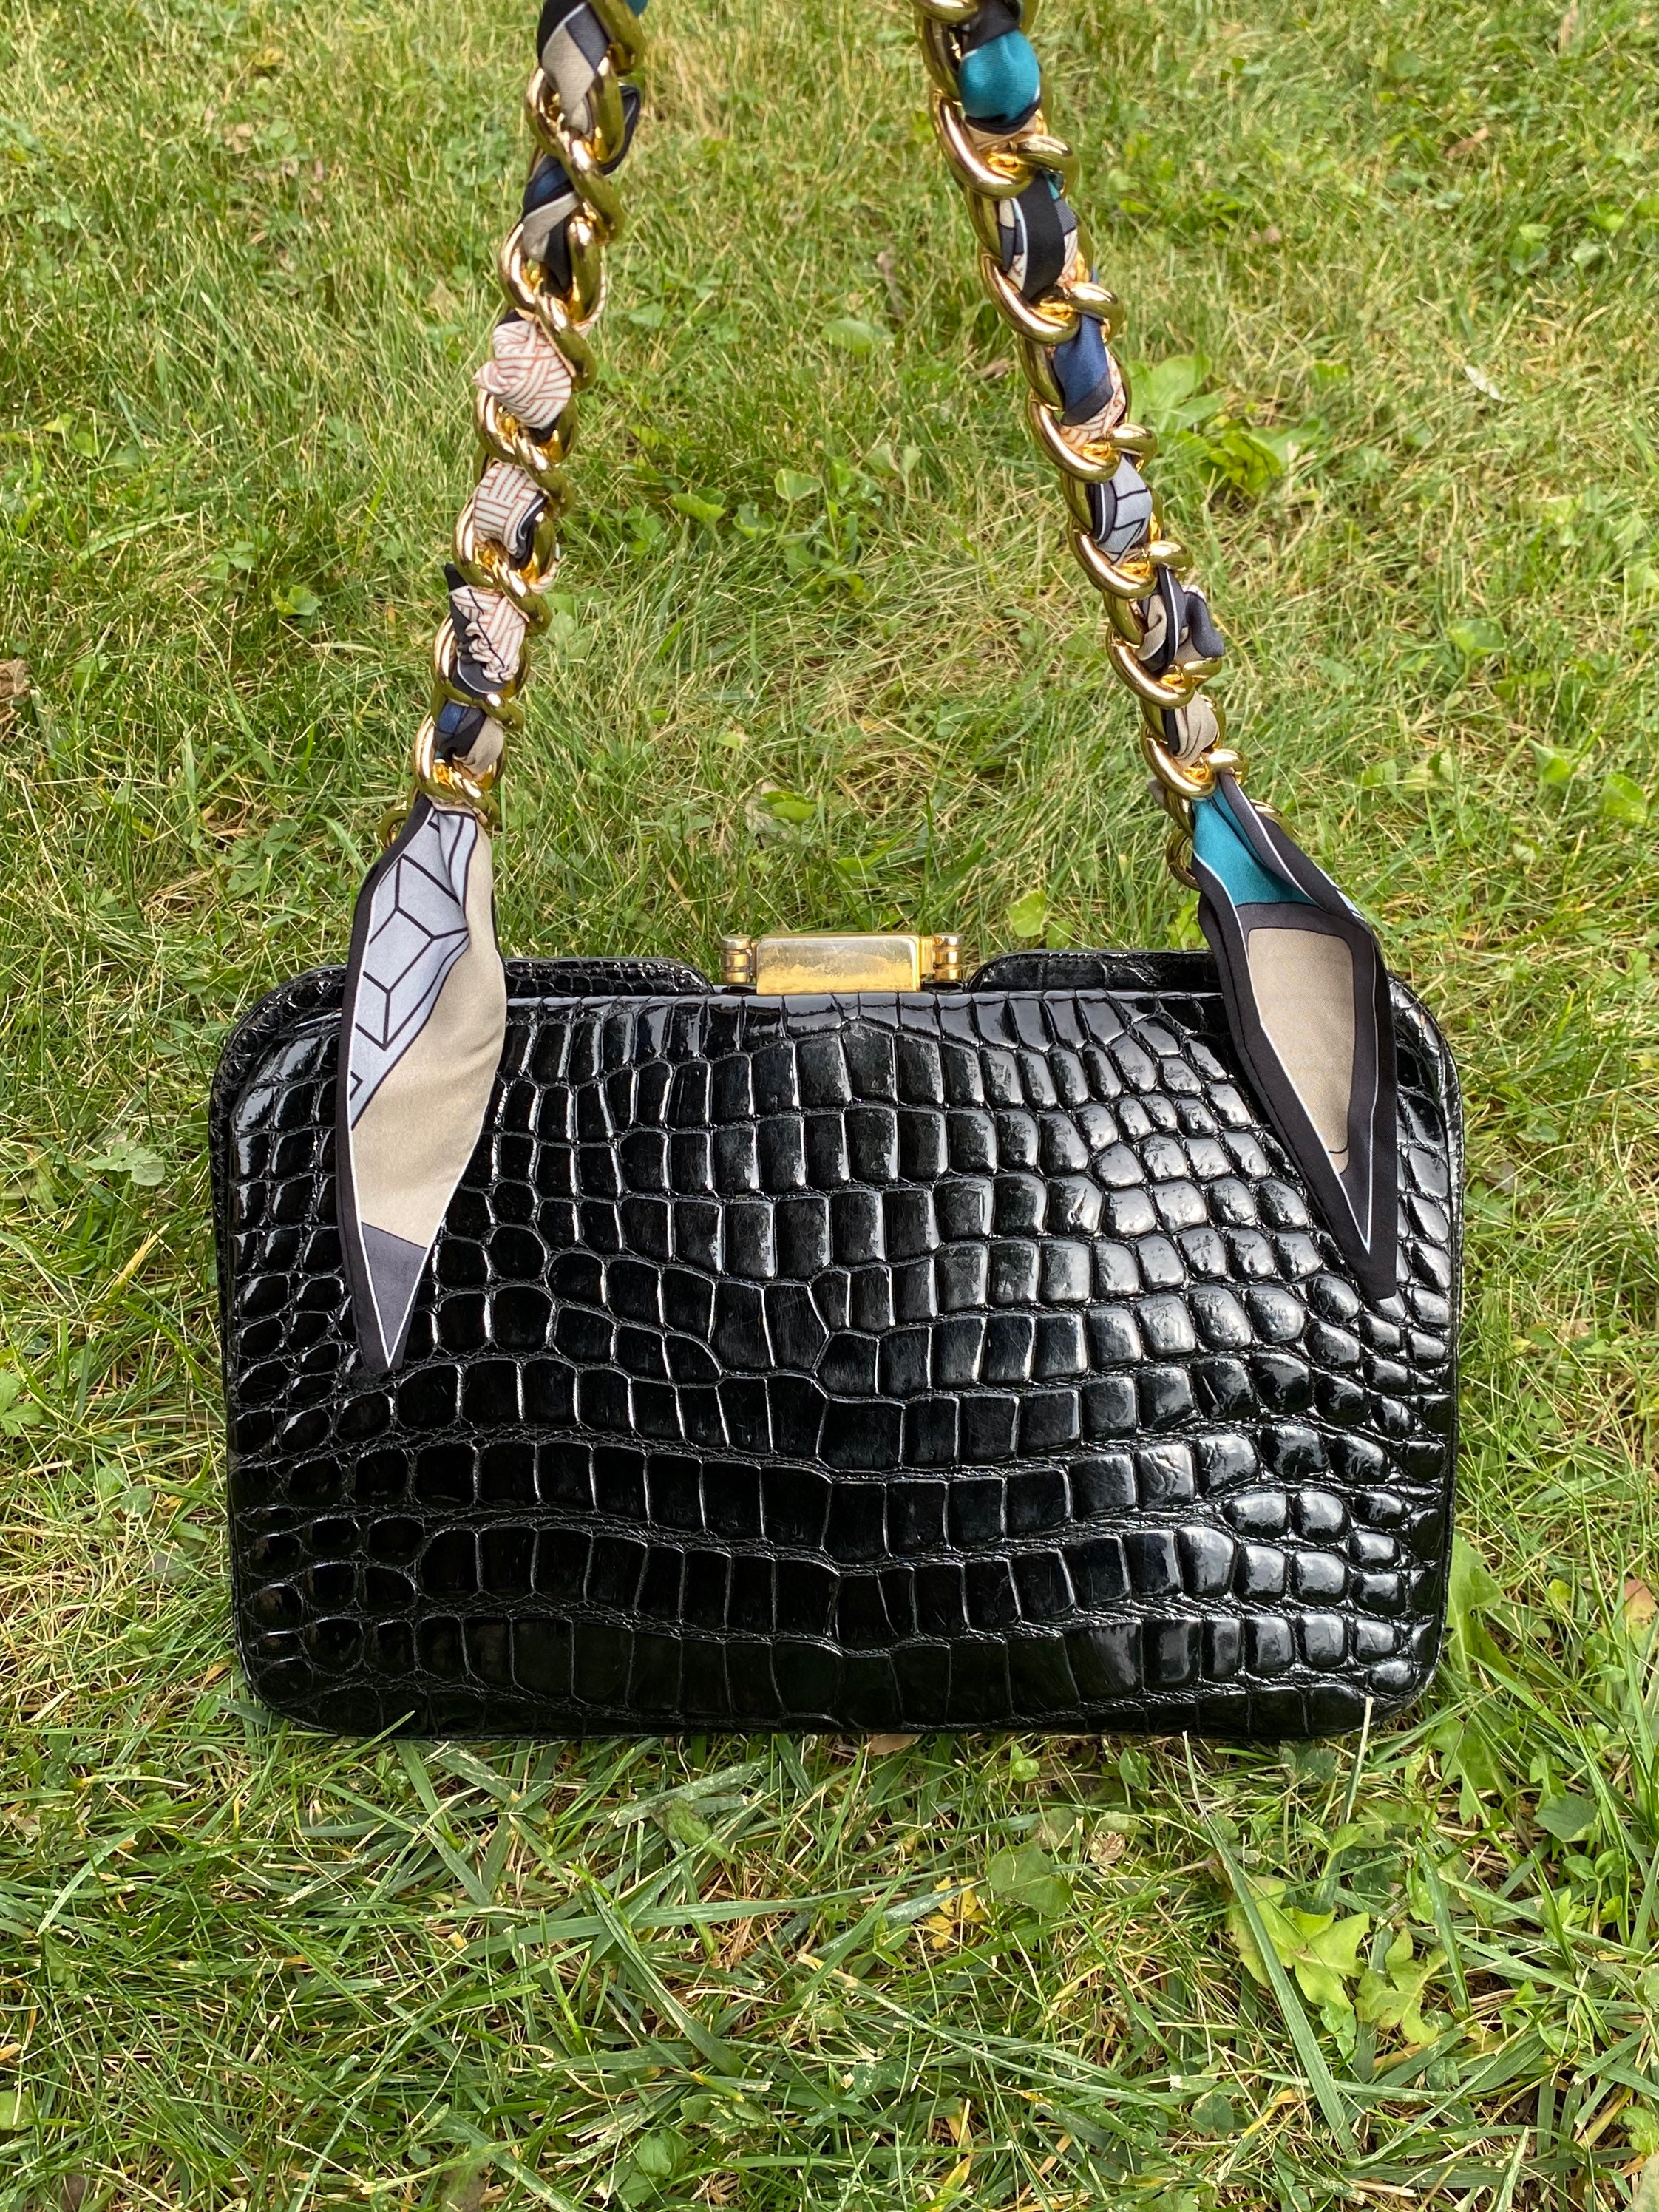 Lot - Fernande Desgranges Black Leather Handbag, circa 1950's